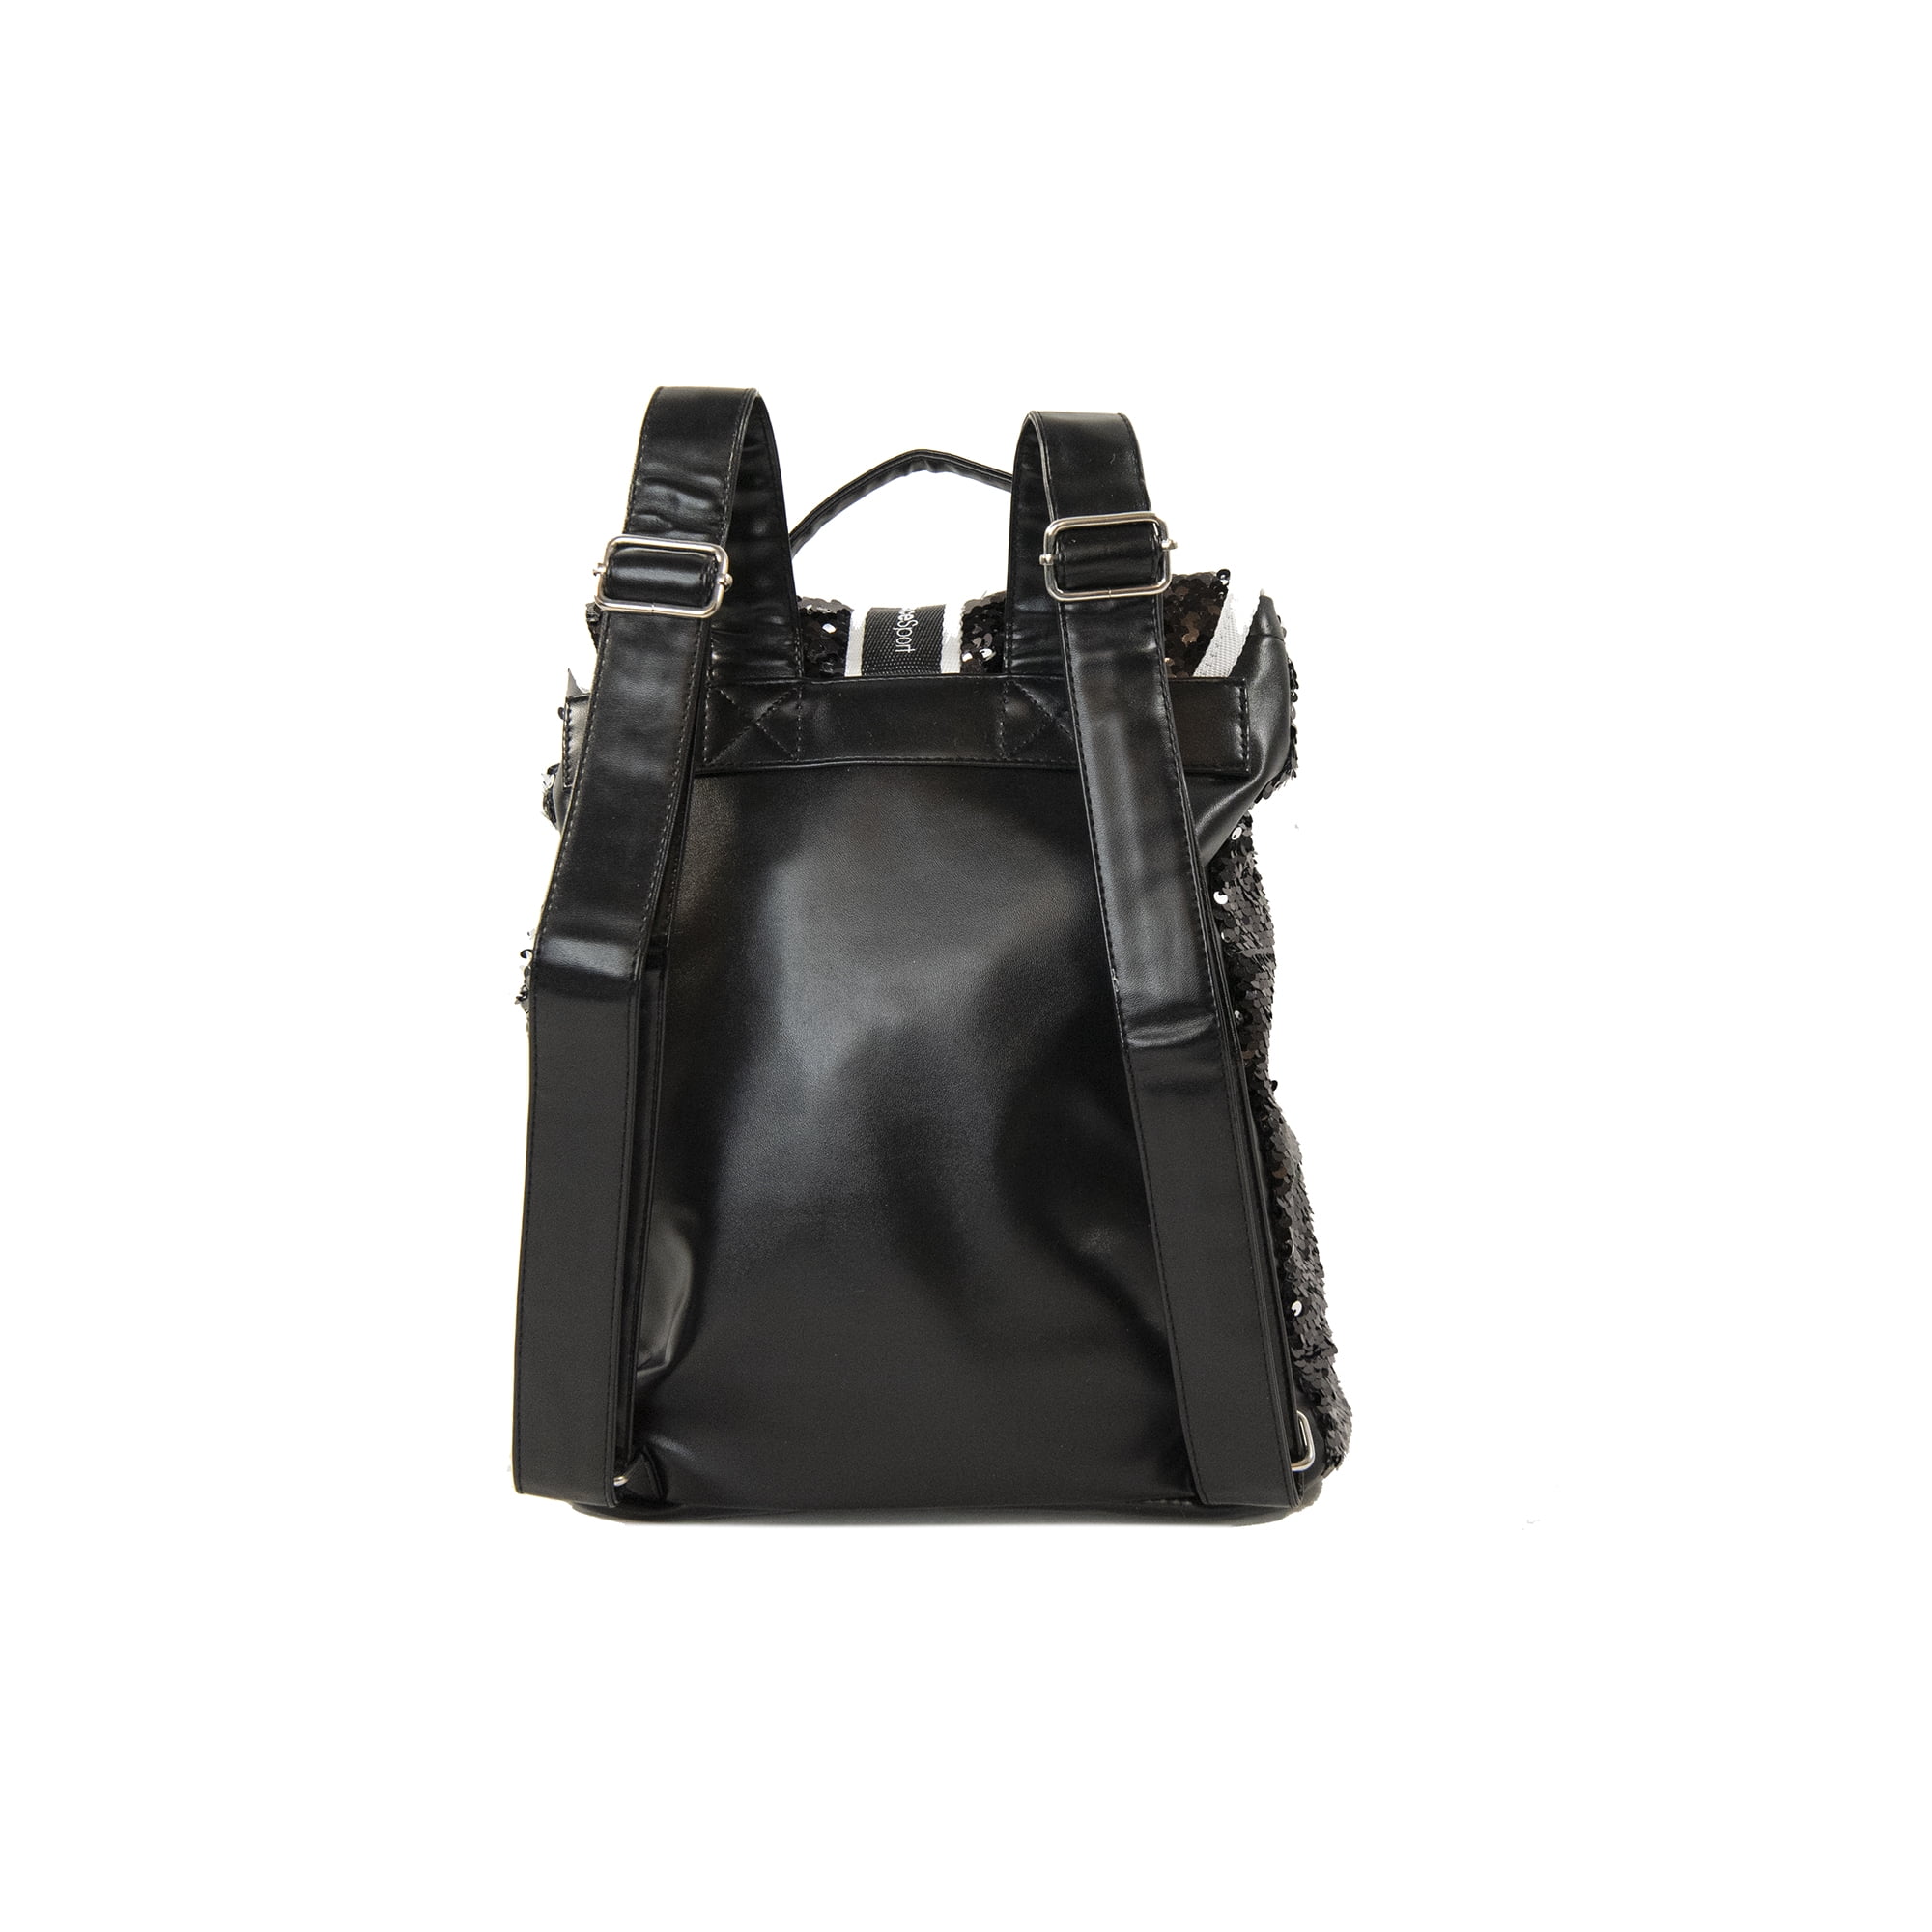 Justice Black Cat Flip Sequin Mini Backpack –